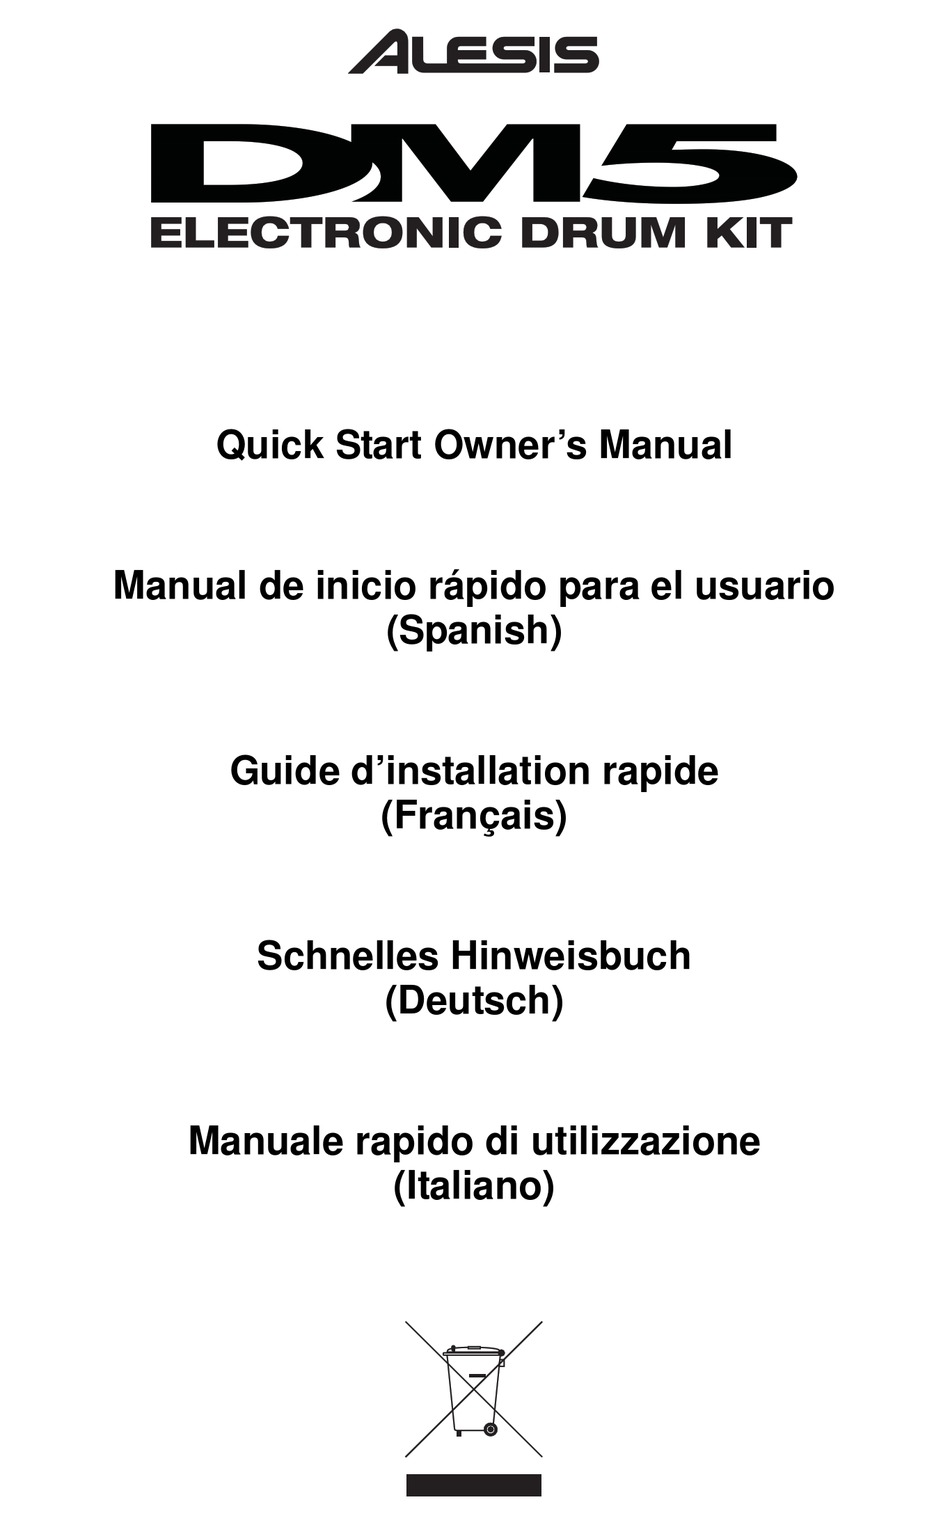 Download free Alesis Qs7 Service Manual software